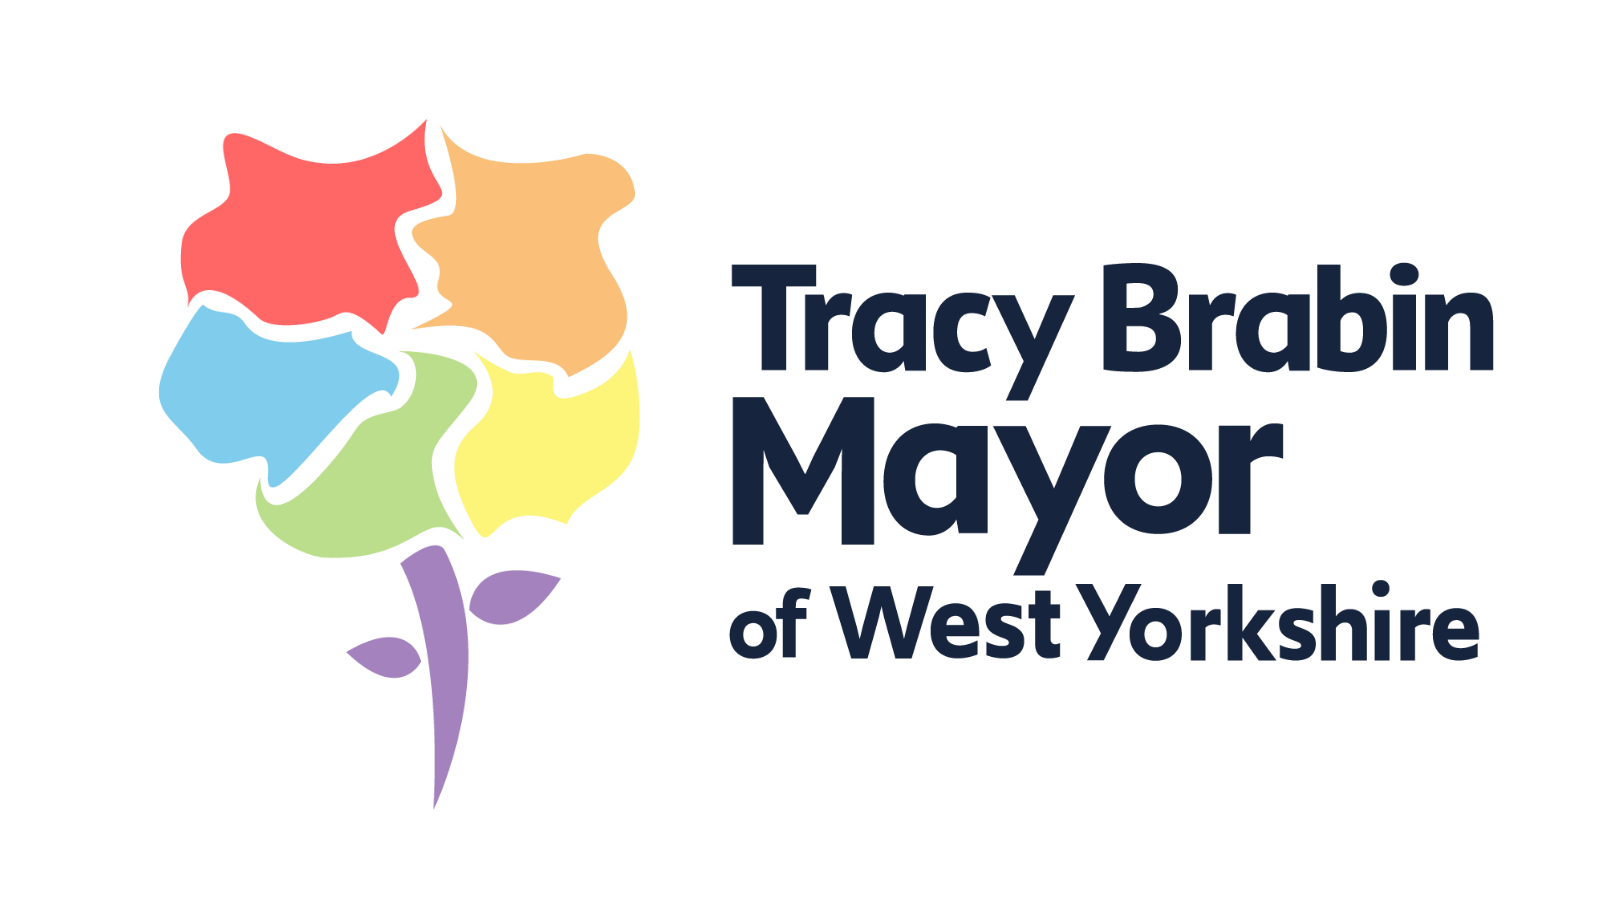 Tracy Brabin Mayor of West Yorkshire 